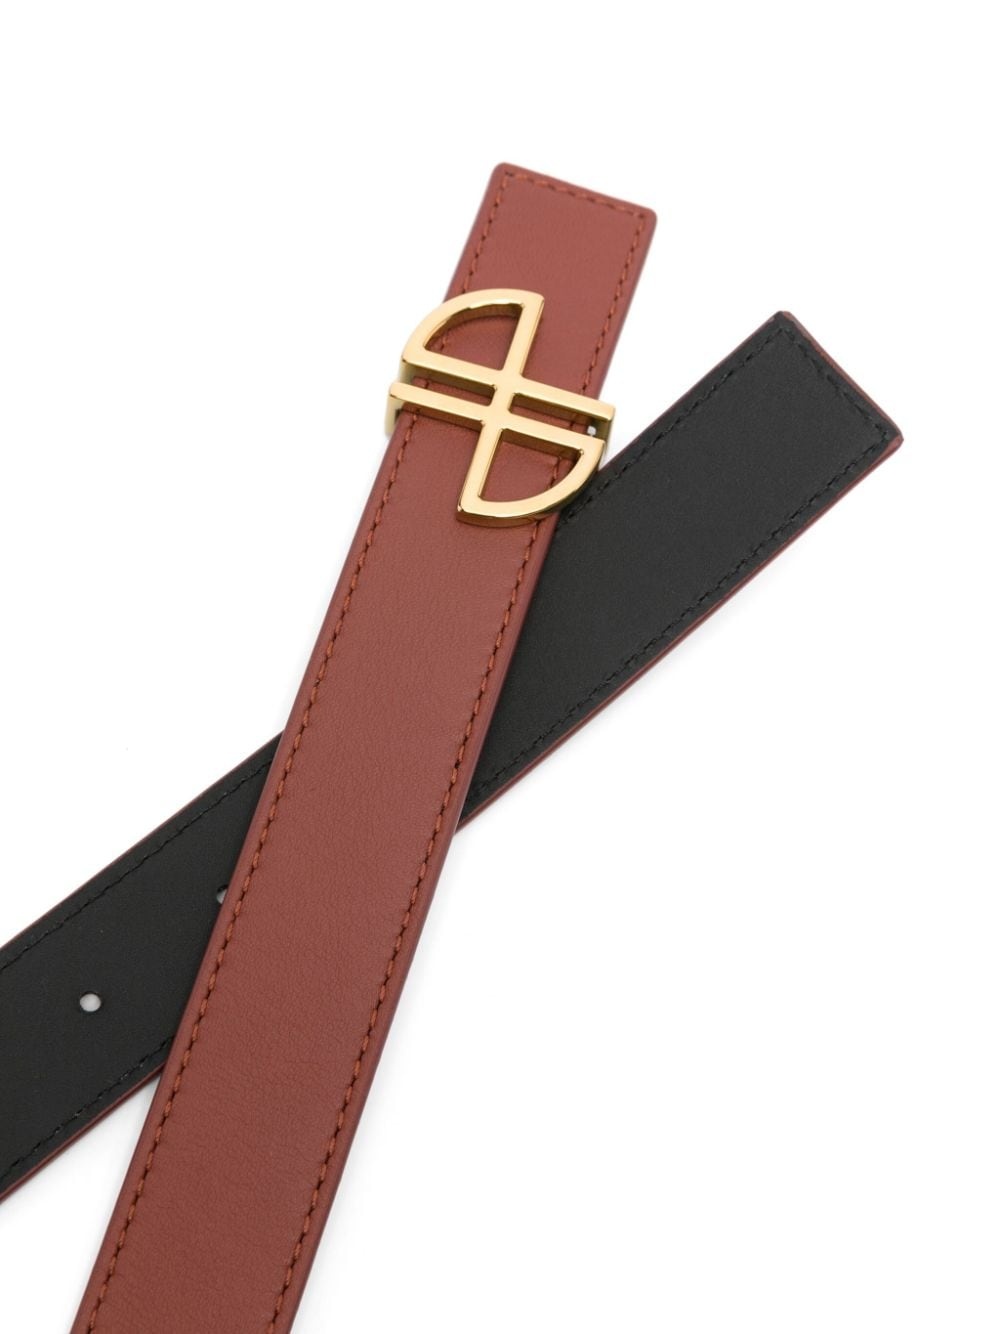 JP-buckle leather belt - 2